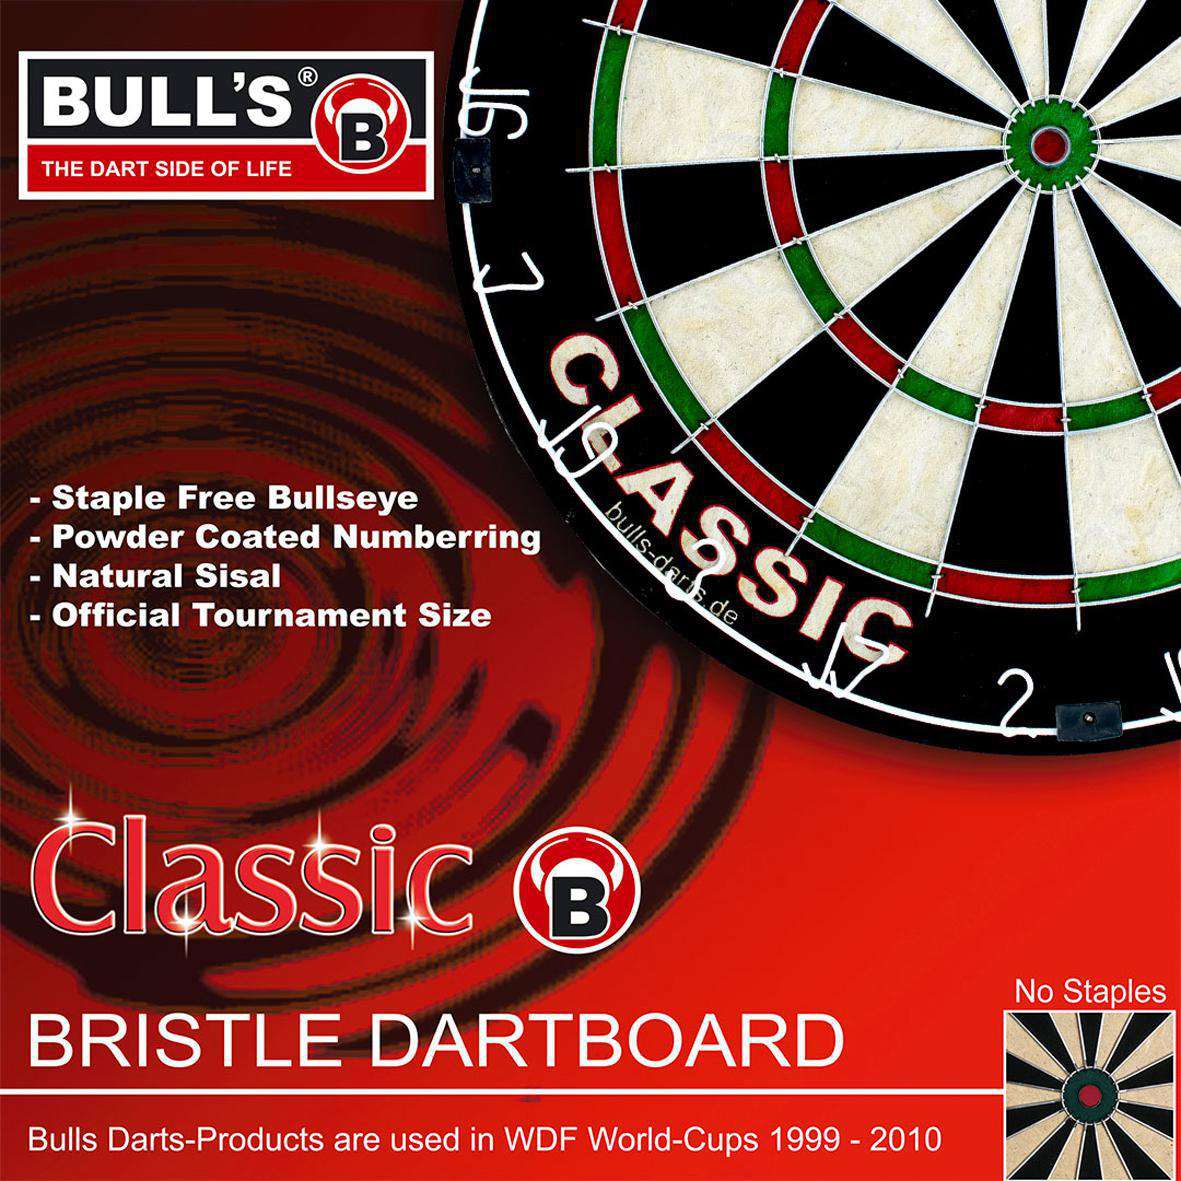 BULL S Bulls Classic Bristle Schwarz/Mehrfarbig Dartboard Dartboard